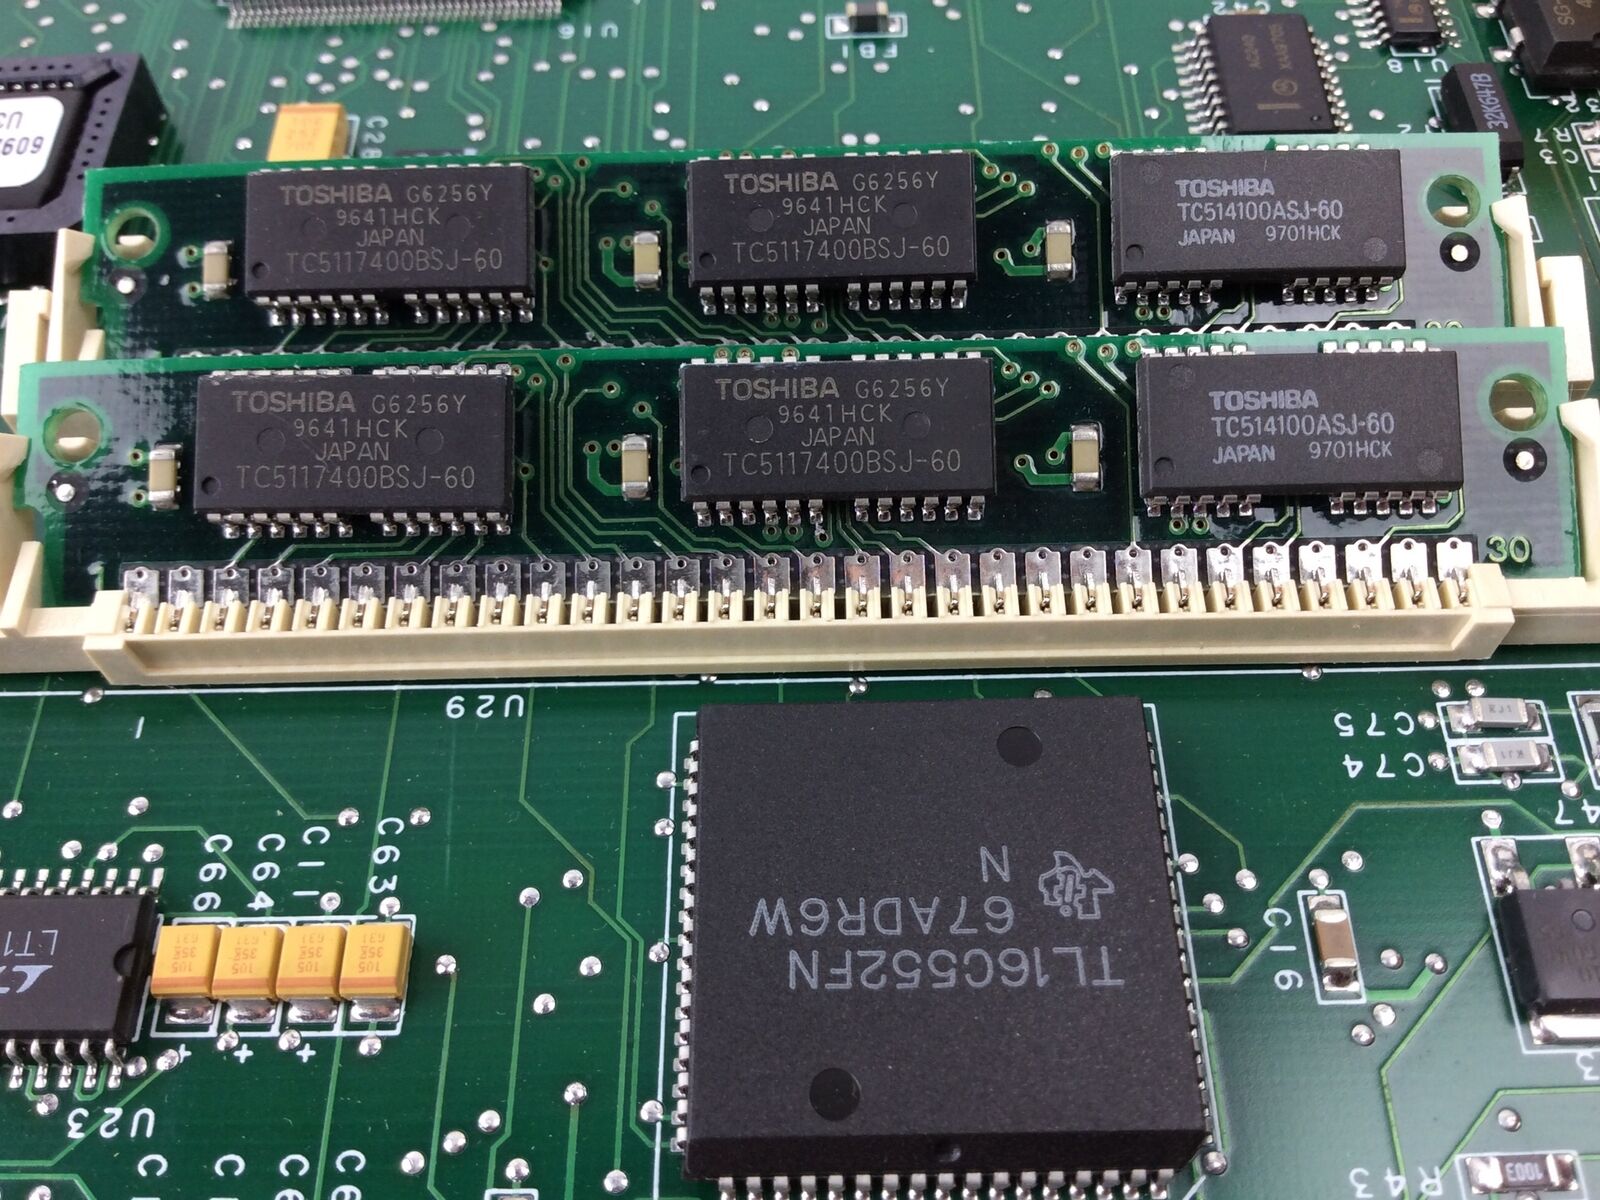 Circuit Board - Chips B0915X-01XX 9645 F82C836 - 609260 - REV AA - Untested